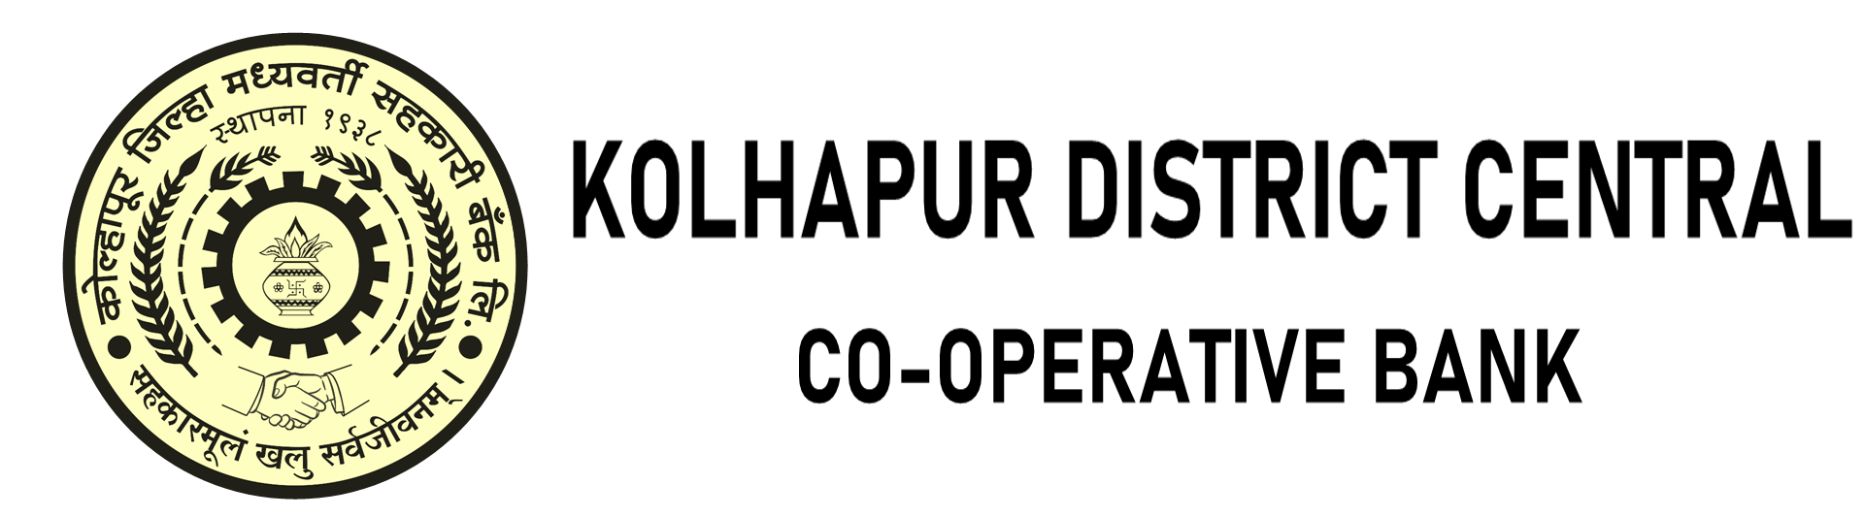 Kolhapur - jankariboard.com